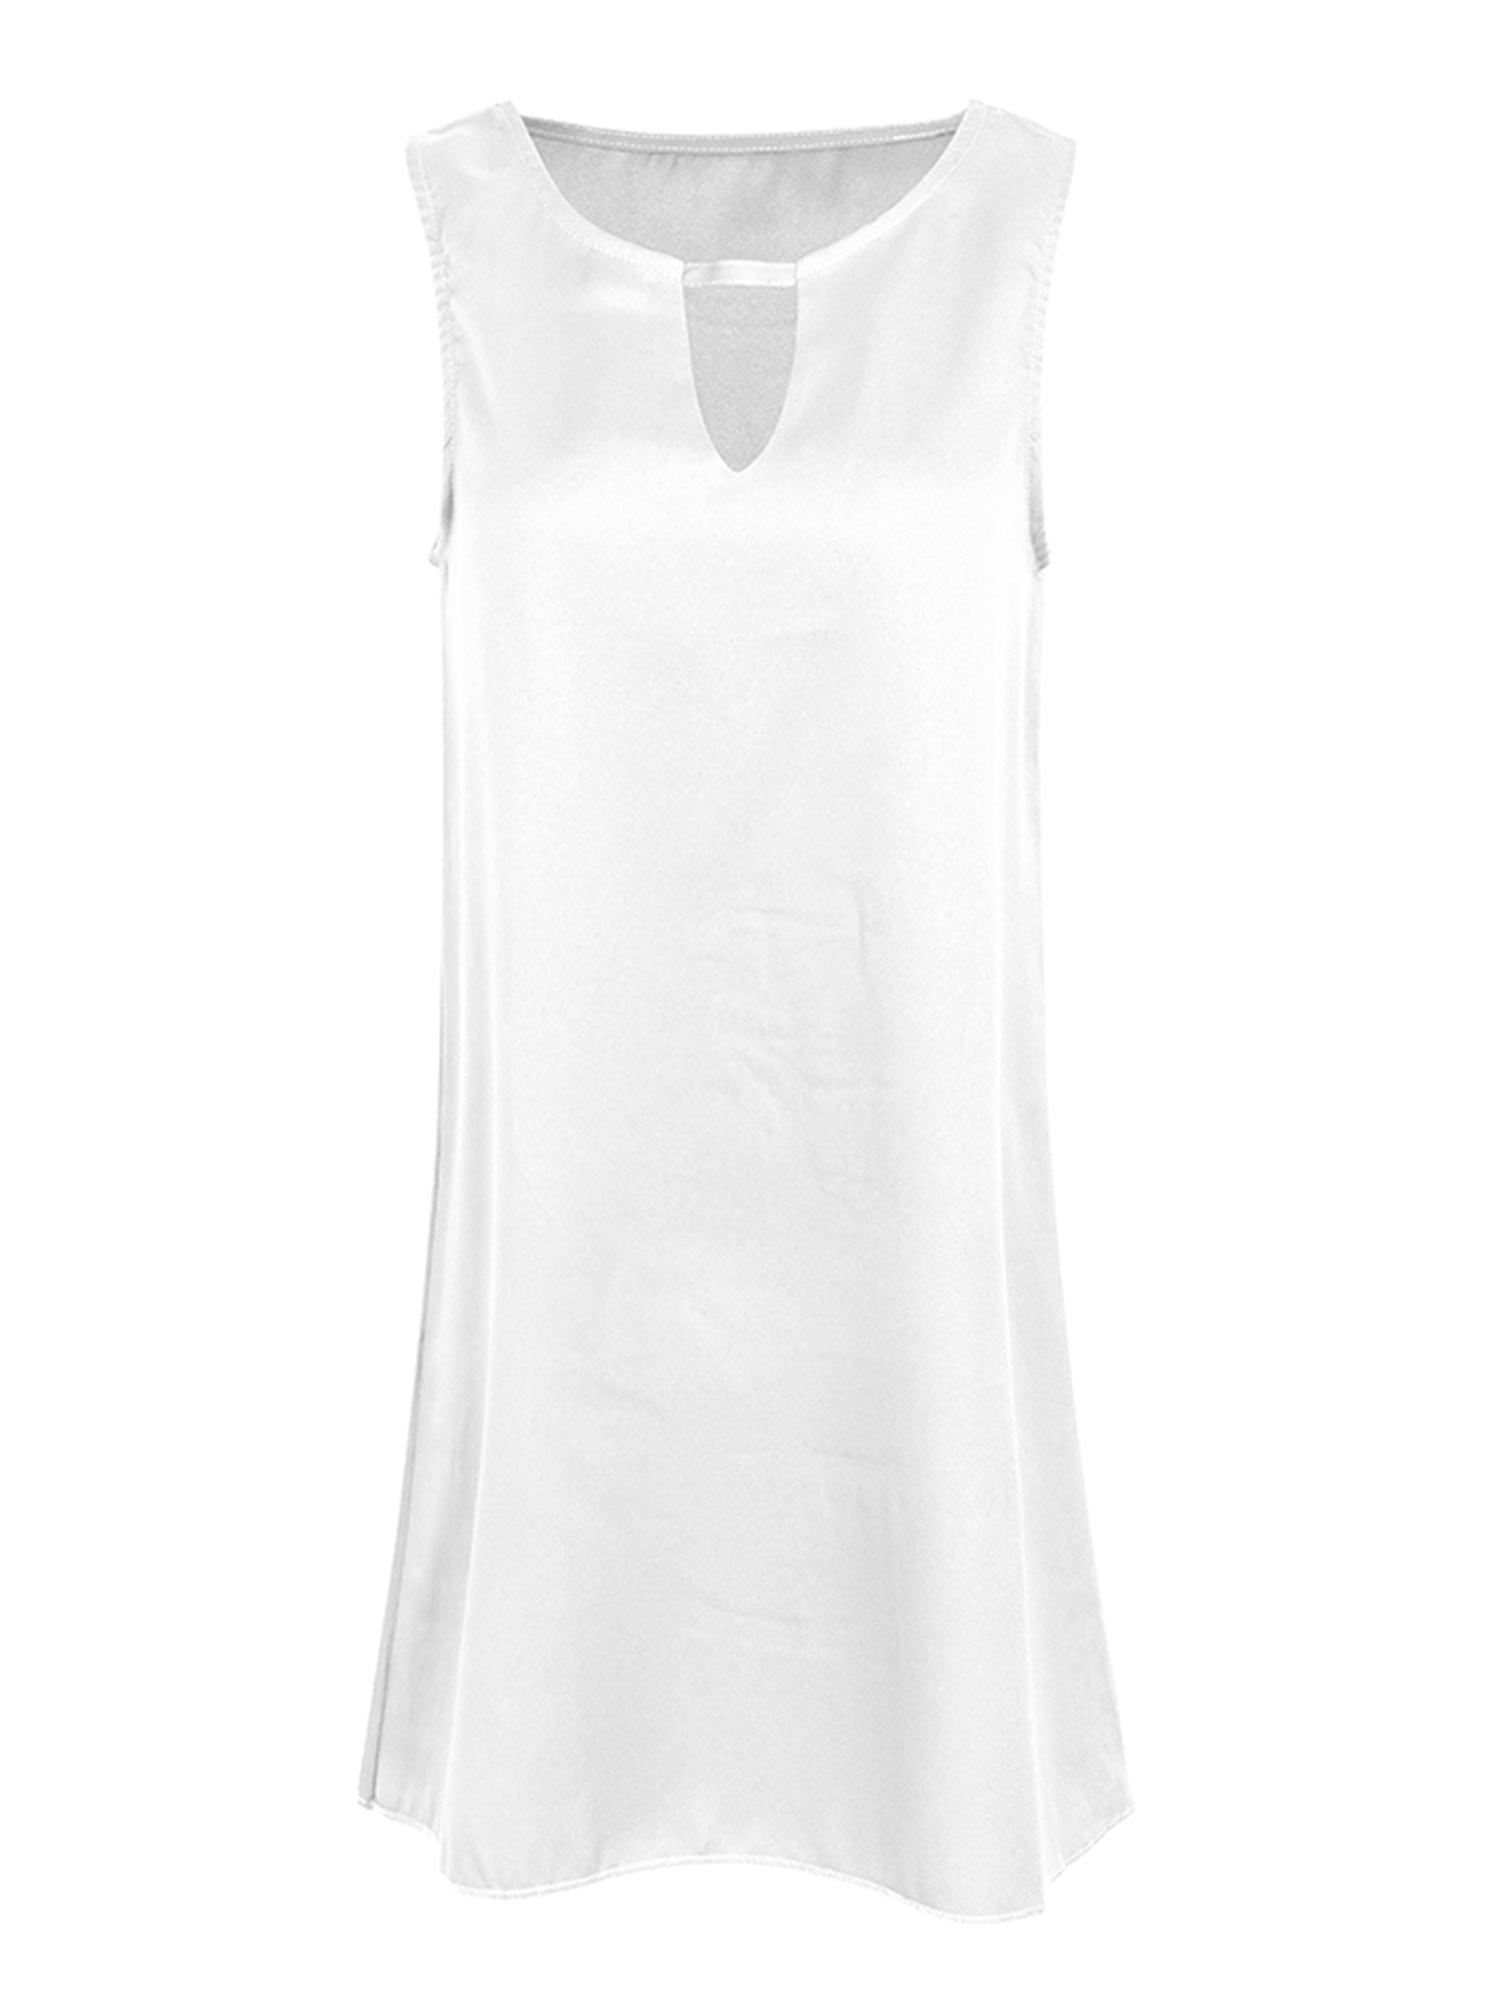 women's plus size white summer dresses